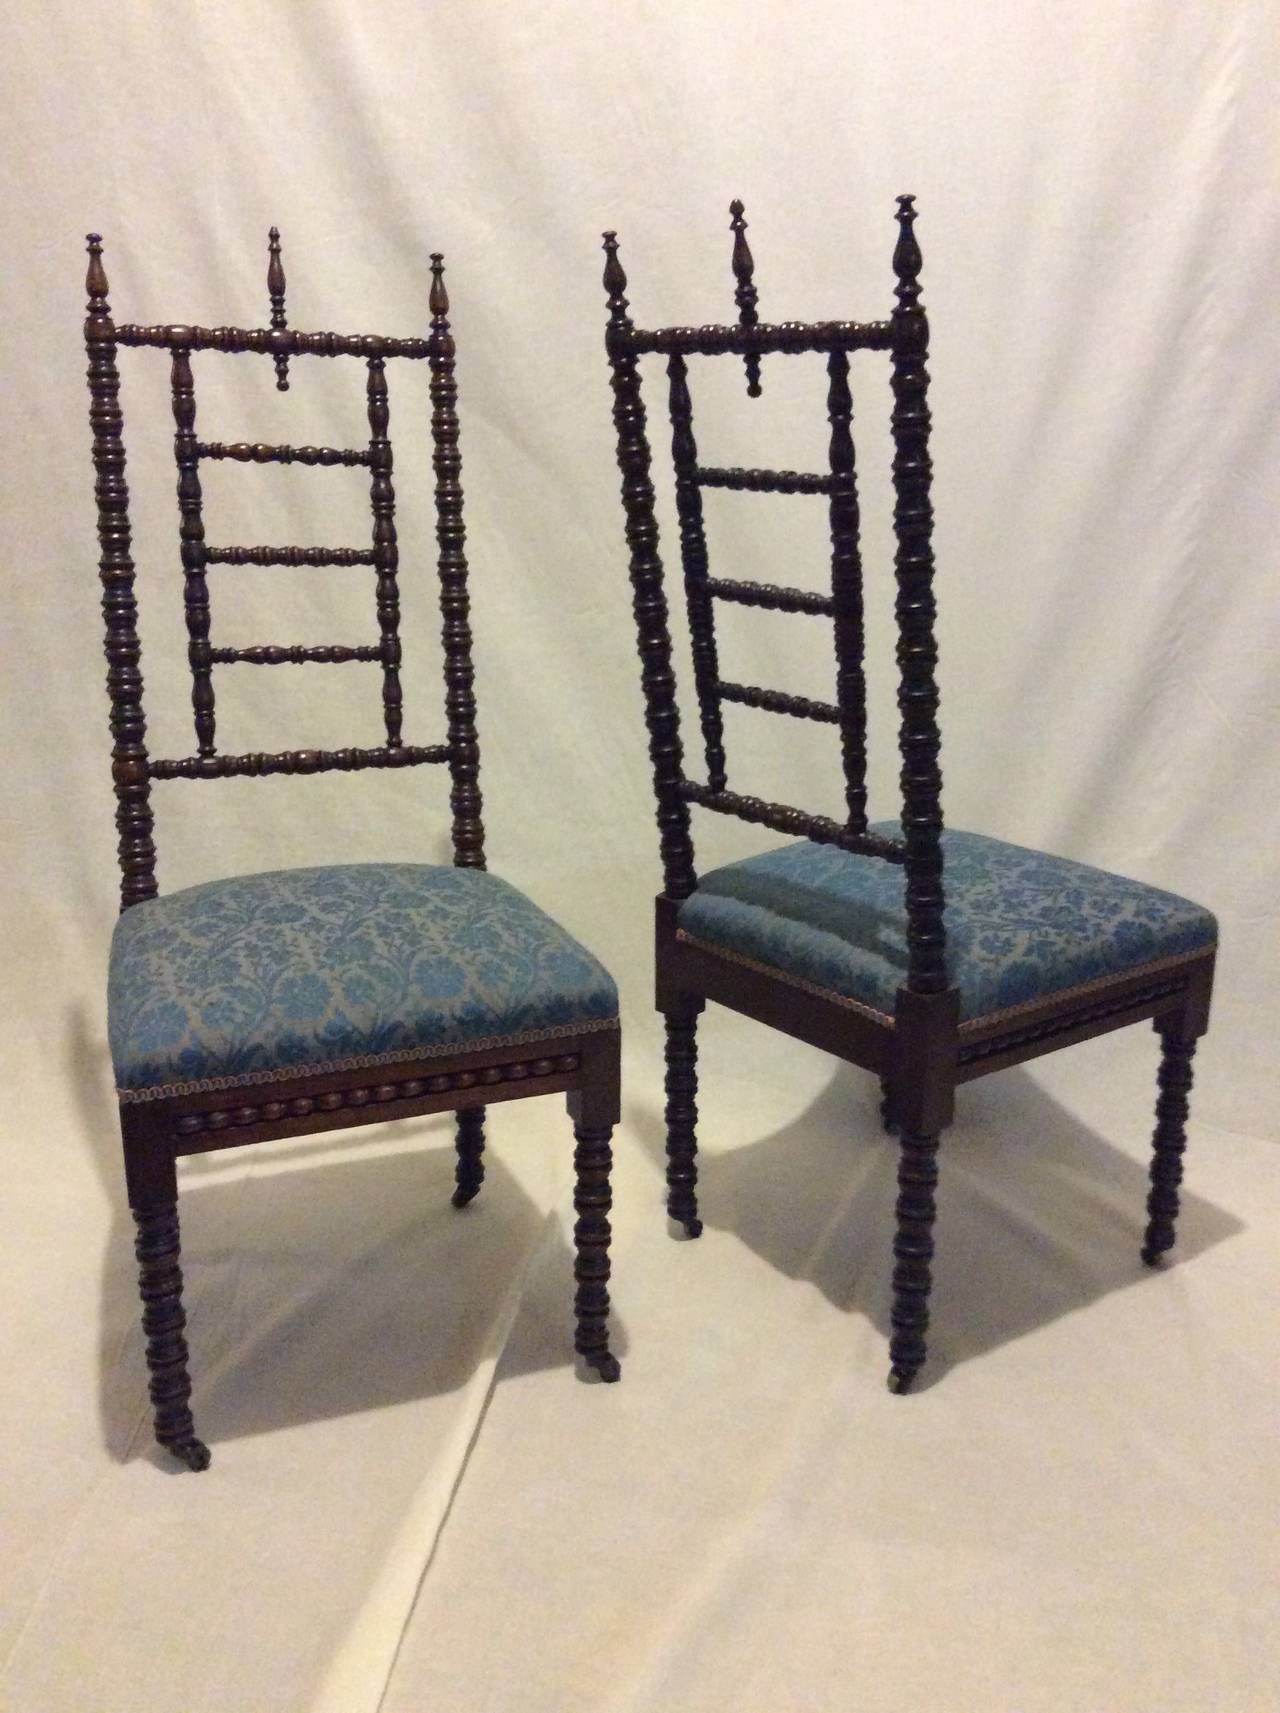 Walnut, Aesthetic Movement 'Spool' side chairs in walnut.
American, circa 1875.